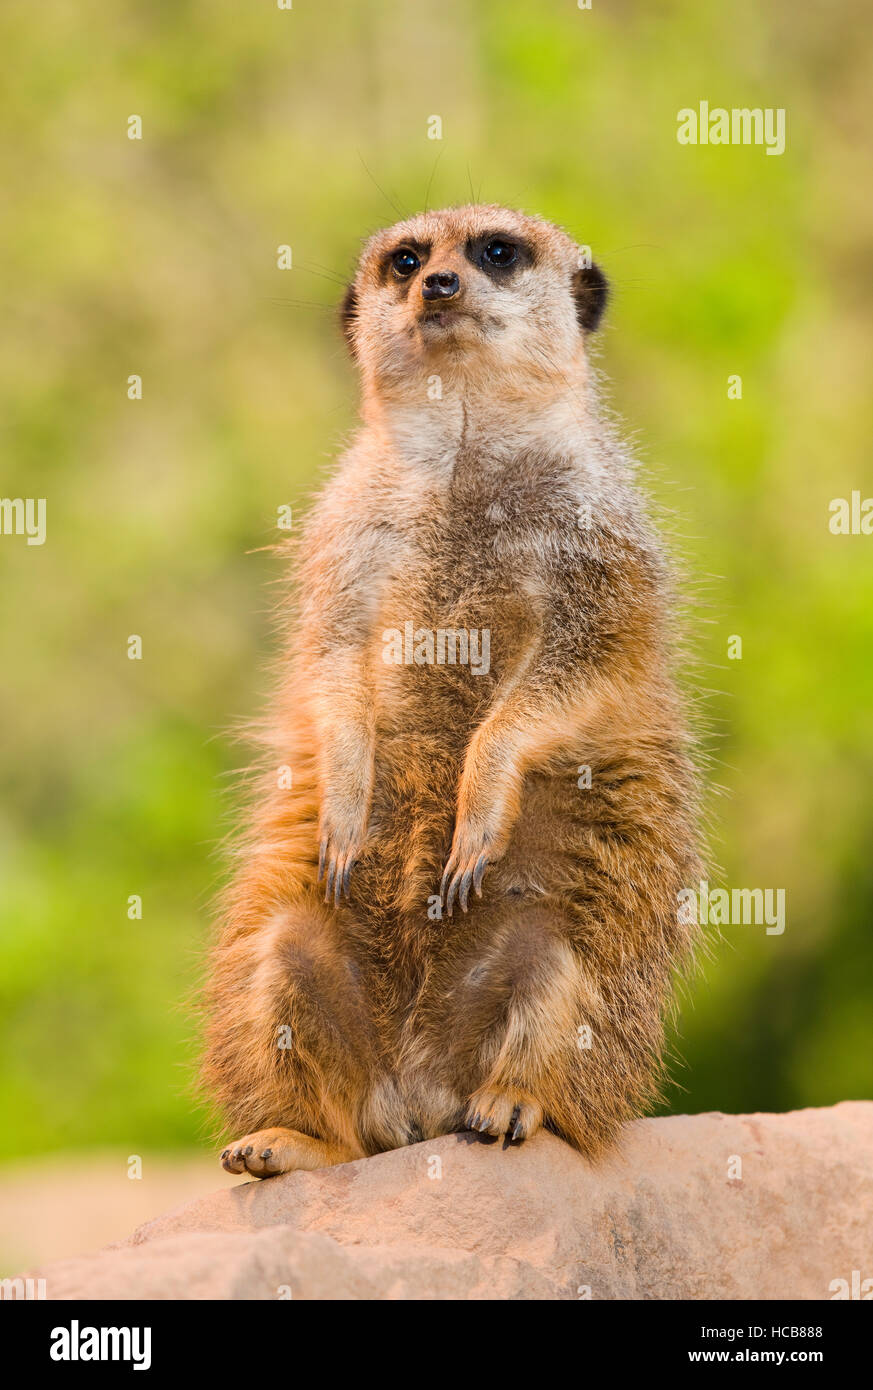 Meerkat or suricate (Suricata suricatta) sitting on rock, captive, Germany Stock Photo